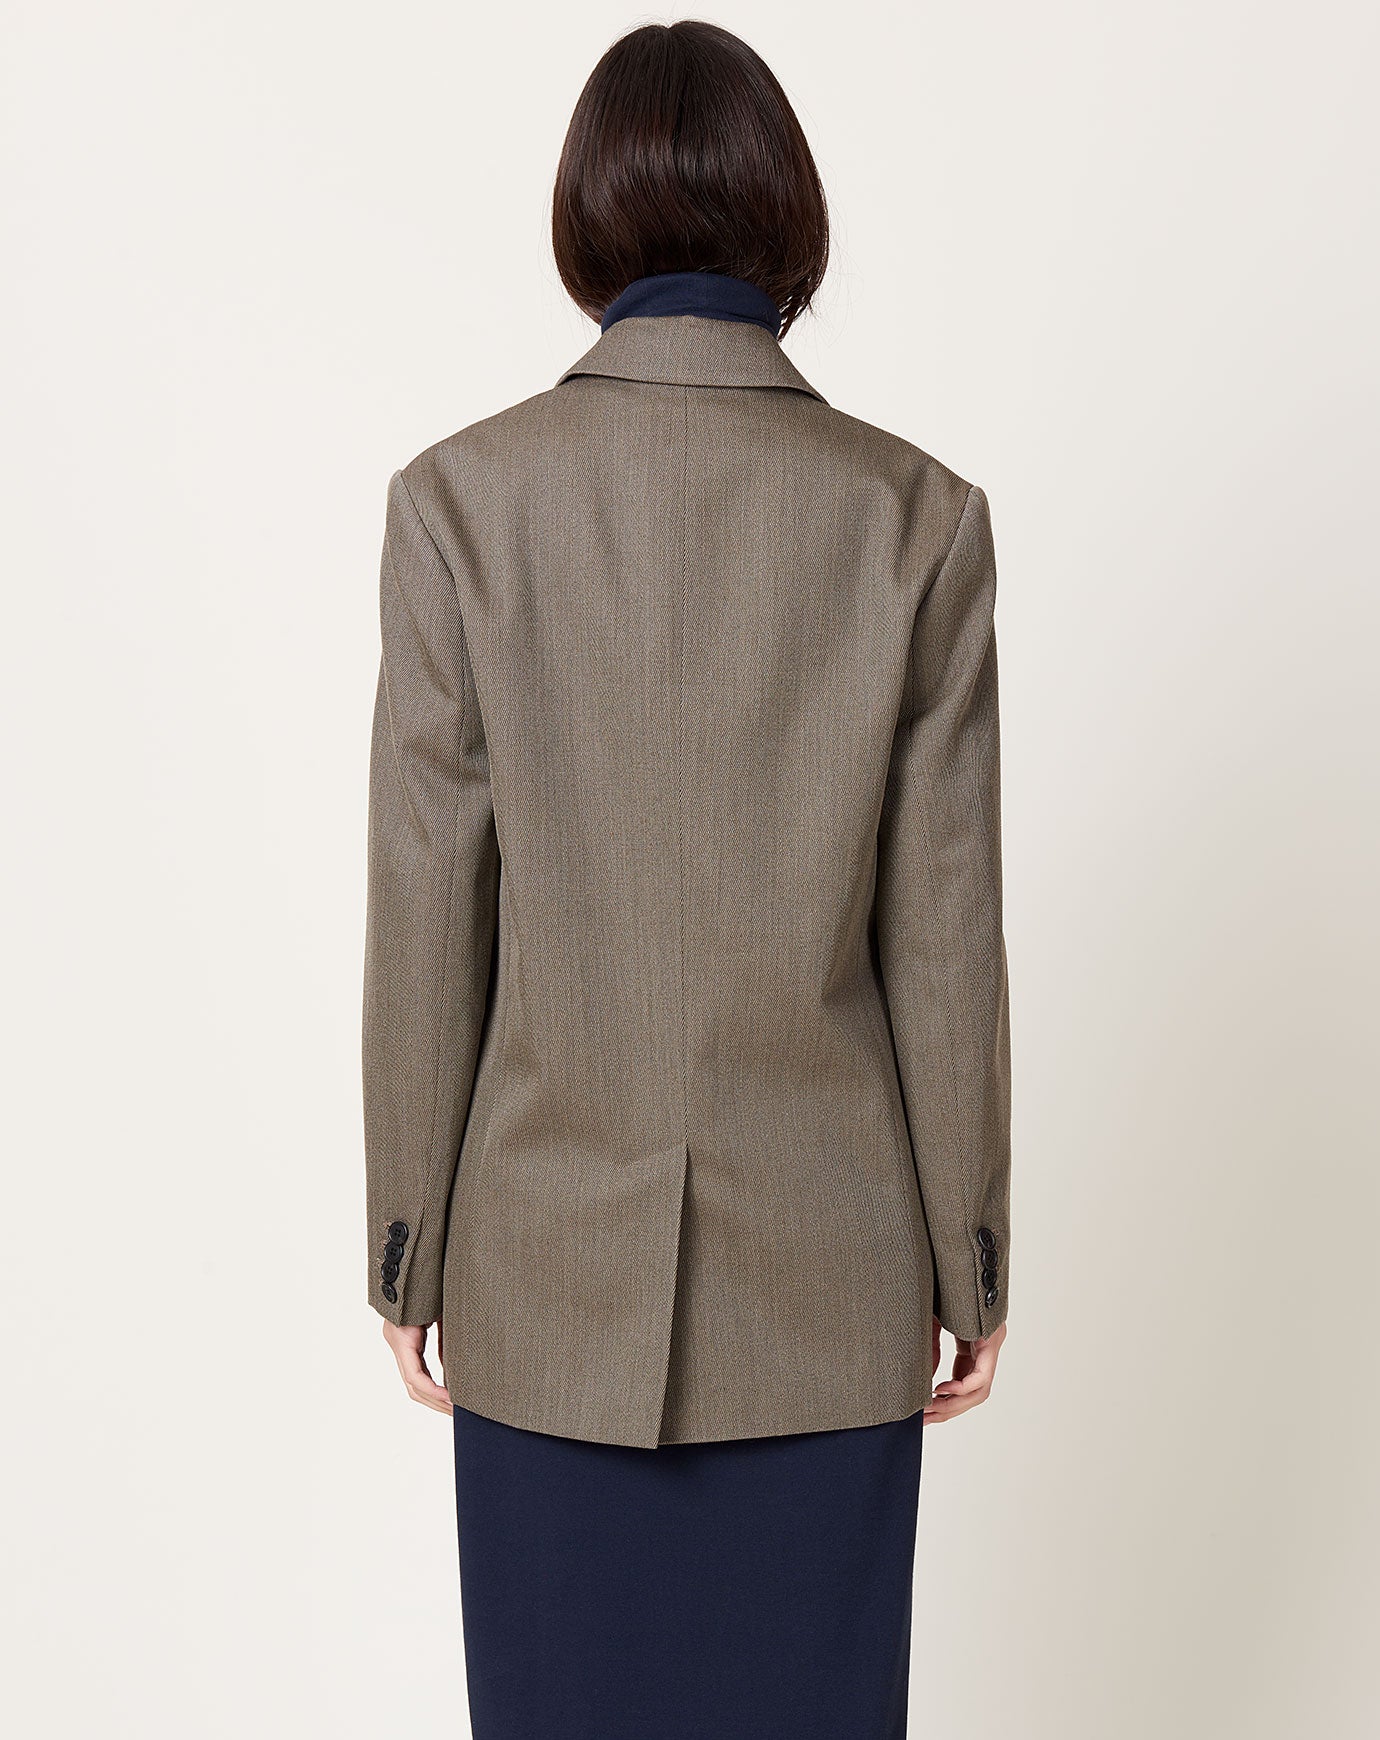 Buy GUOCAI Men Fall Winter Thick 1 Button Slim Dress Blazer Jacket Sport  Coat 4 L at Amazon.in